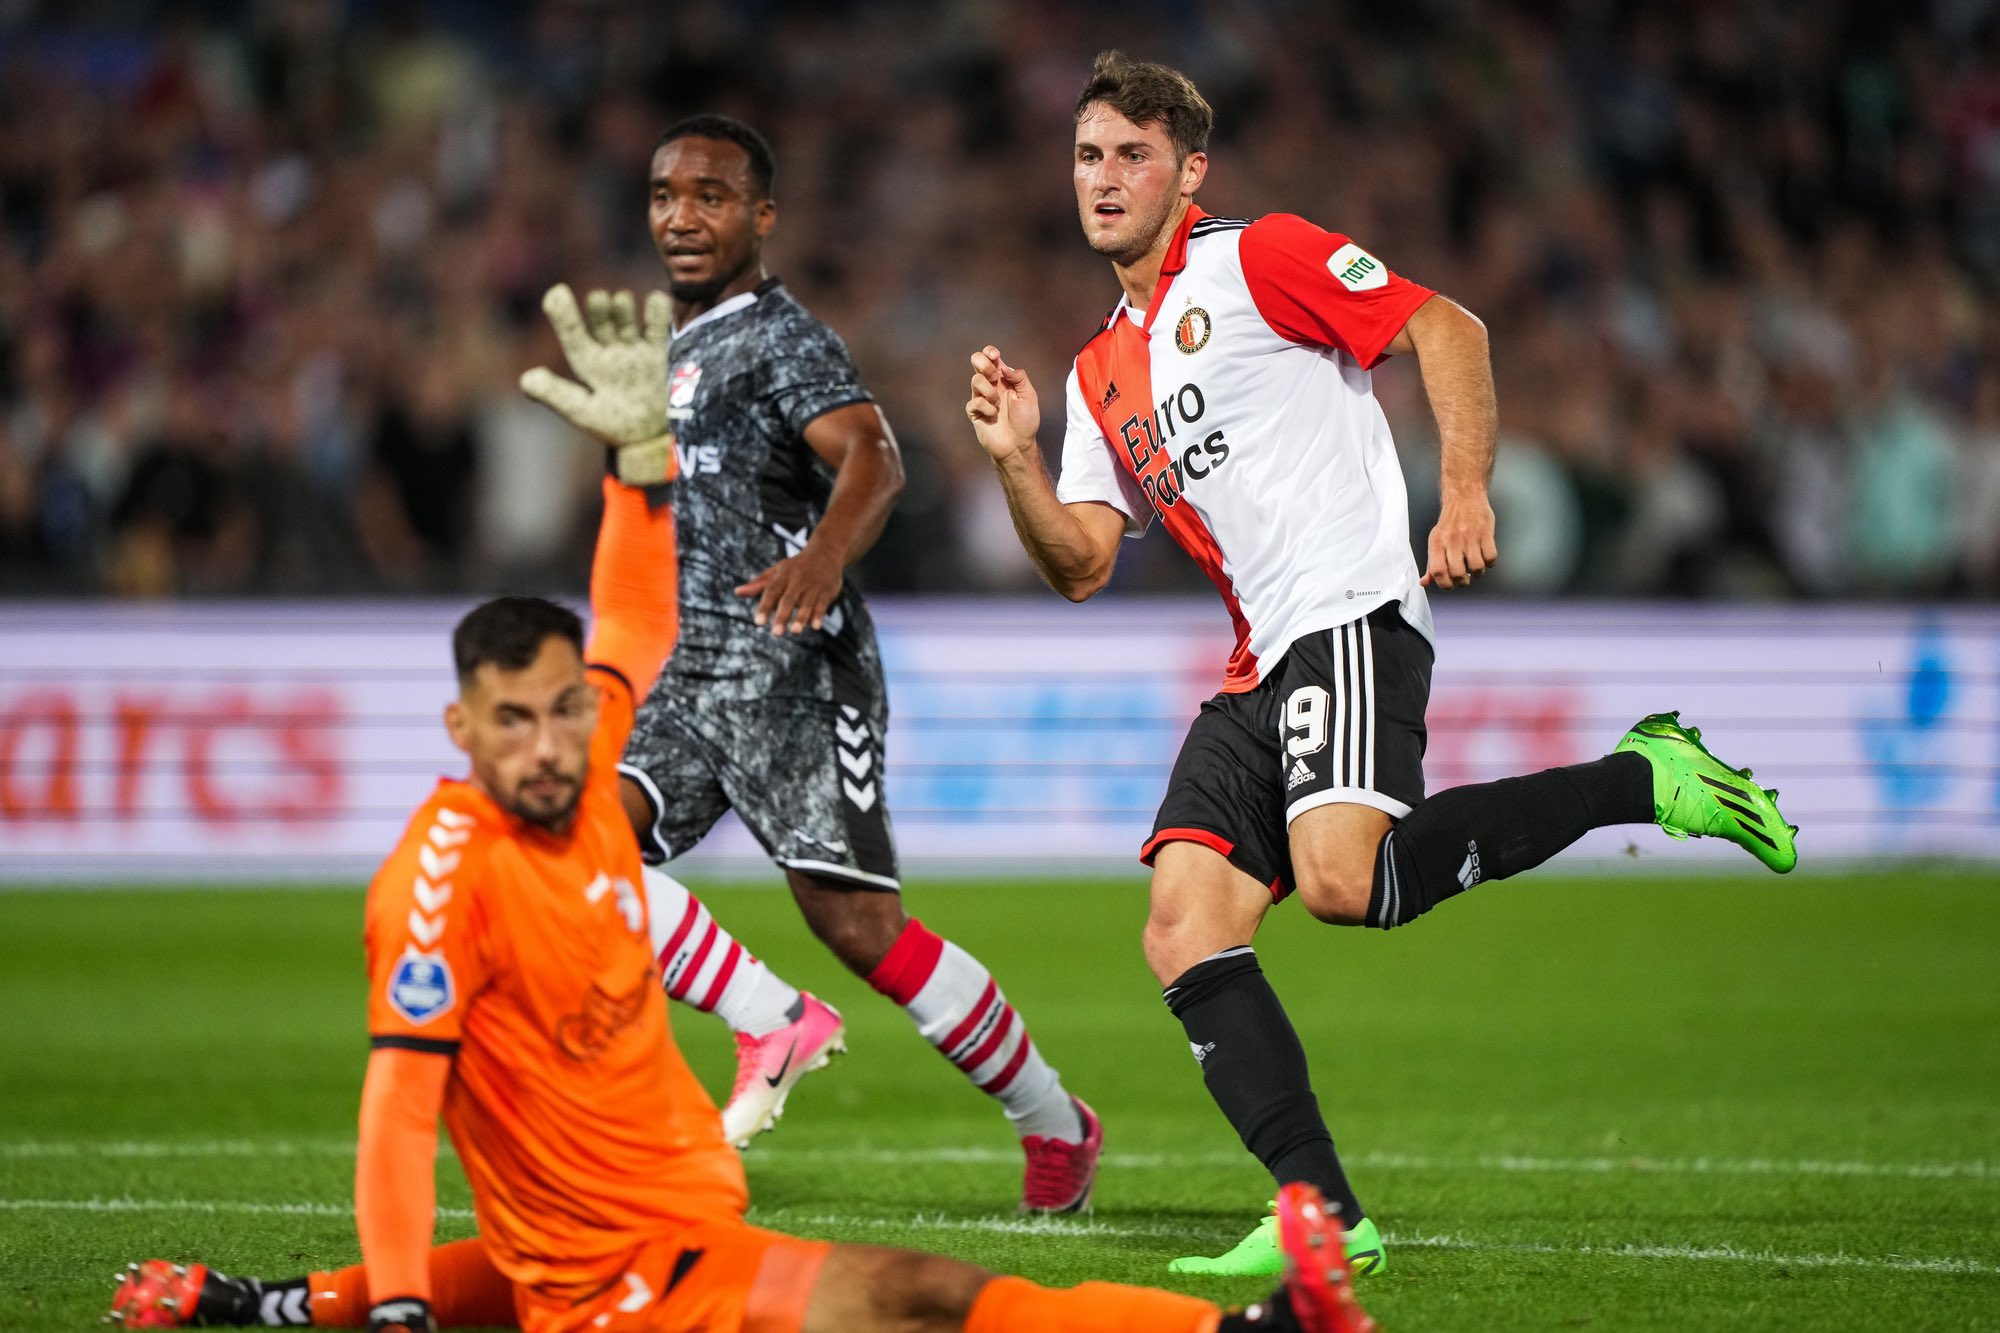  Feyenoord players Santiago Gimenez celebrates his goal with teammate David Hancko during the match against Sparta Rotterdam.